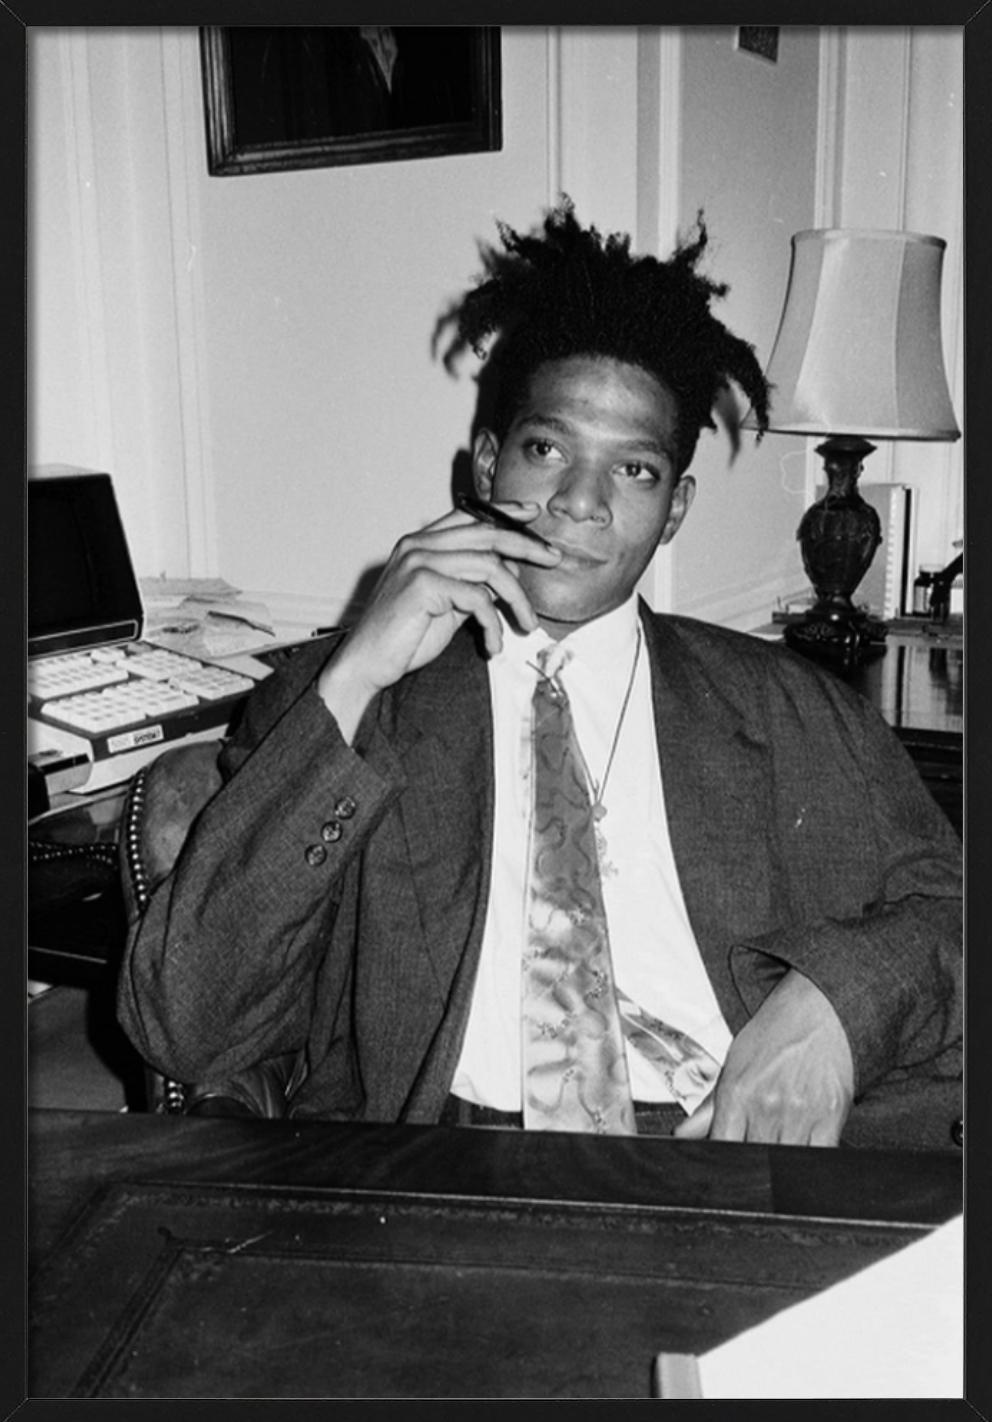 Jean-Michel Basquiat II - portrait in a suit, fine art photography, 1985 - Black Black and White Photograph by Roxanne Lowit